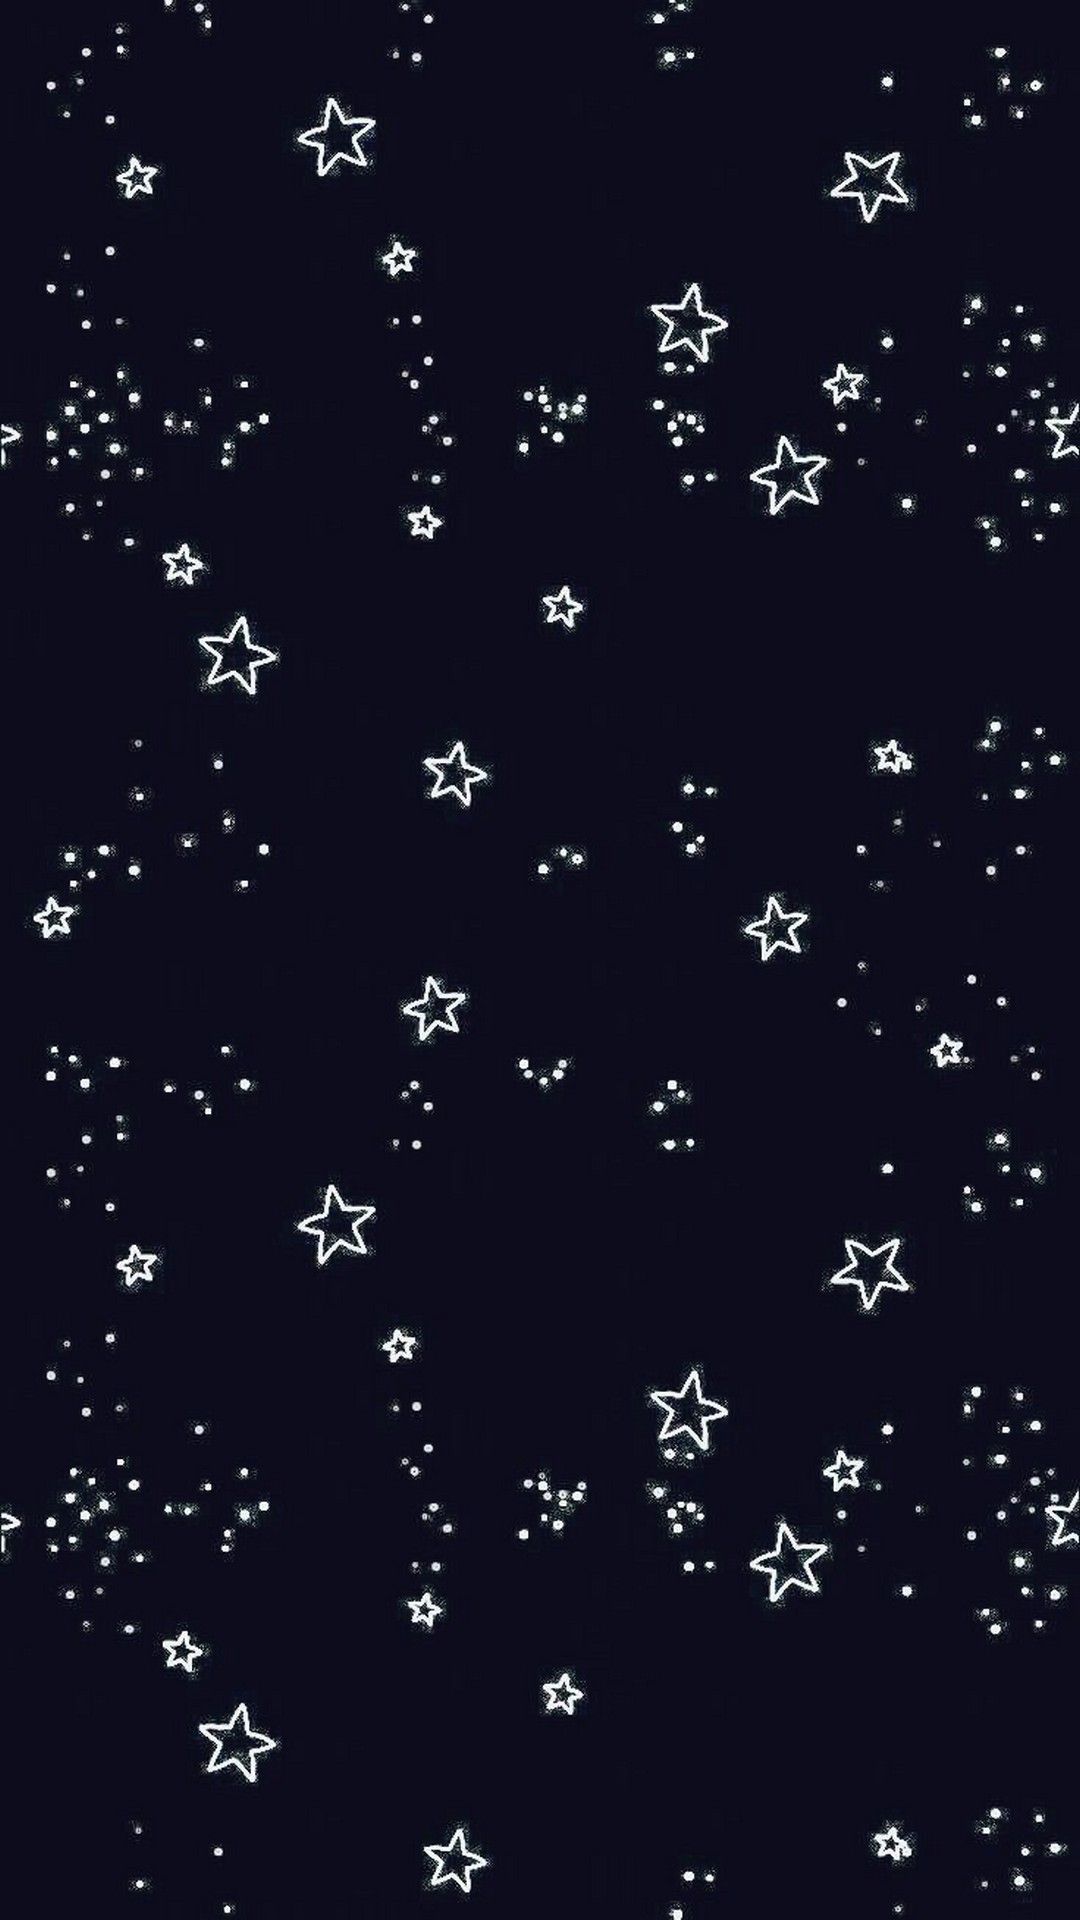 IPhone wallpaper of stars on a black background - Dark, pattern, black